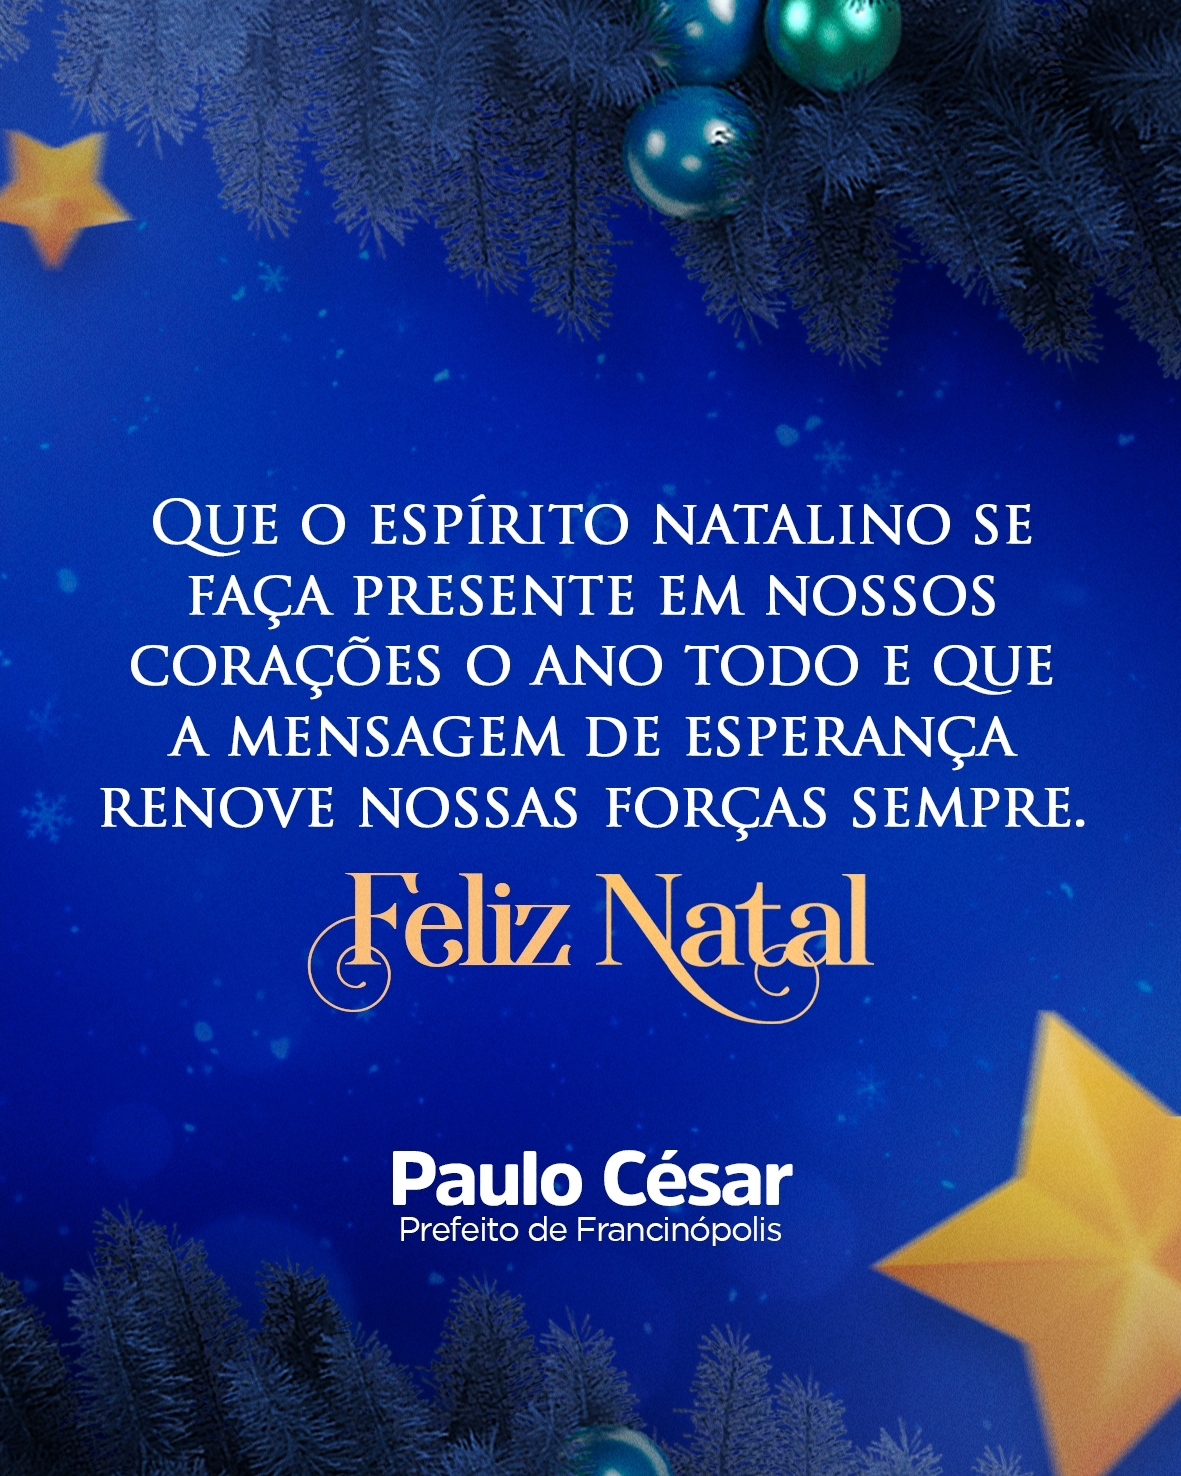 Prefeito de Francinópolis Paulo César publica mensagem natalina – Portal V1